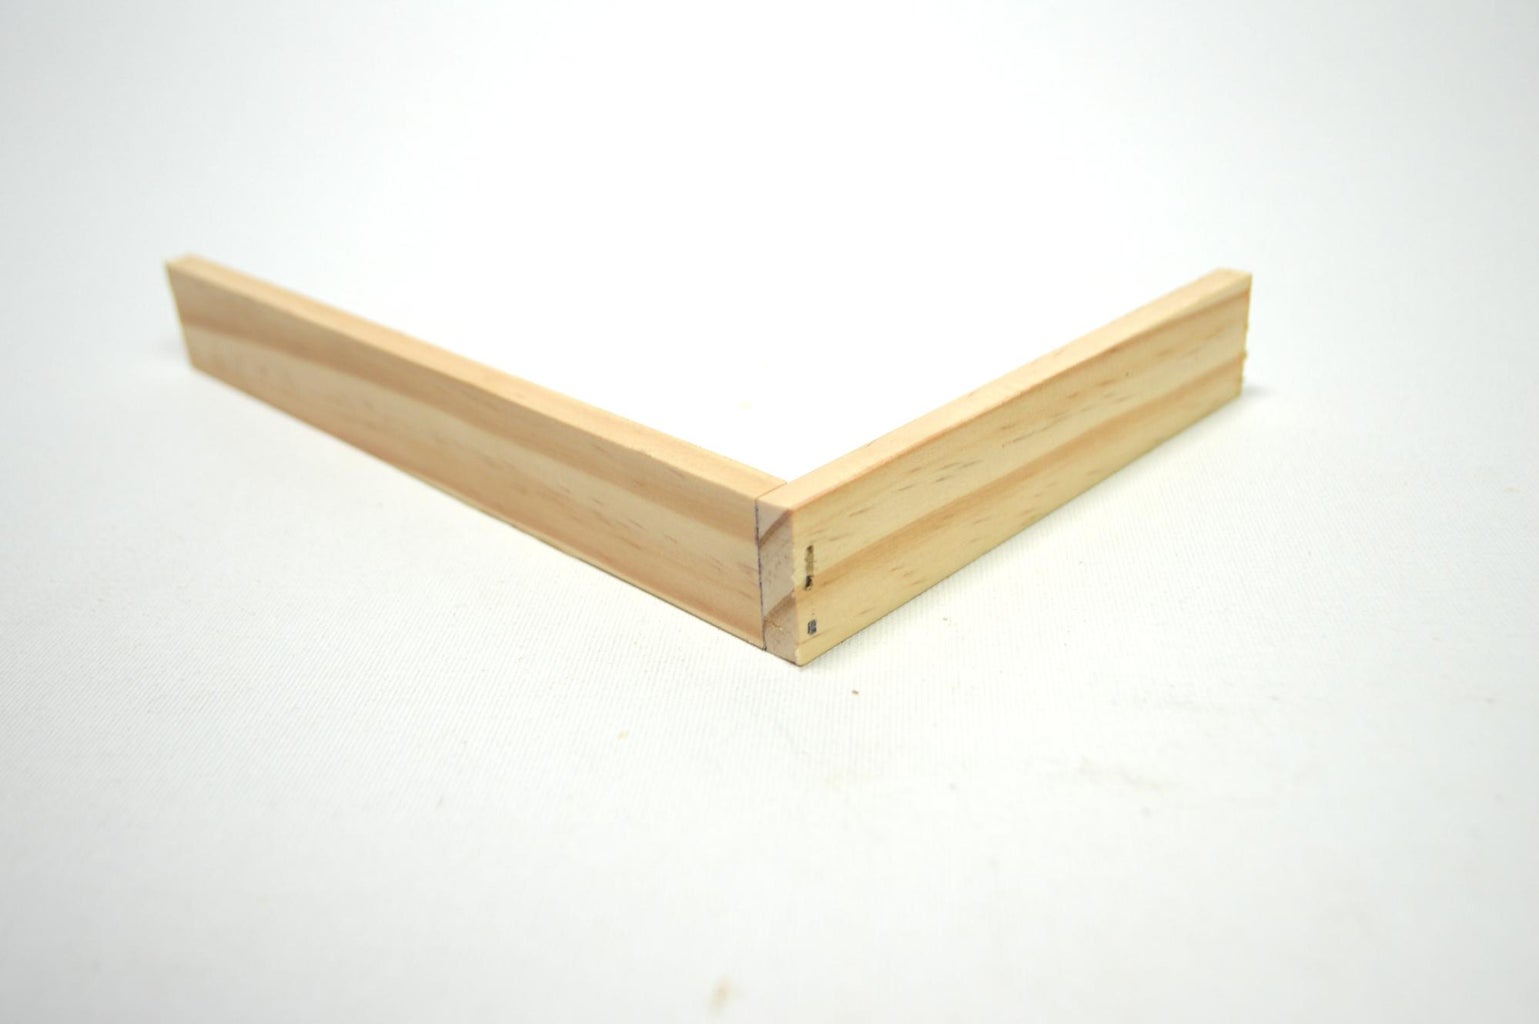 Making the Internal Wood Frame - Part 1